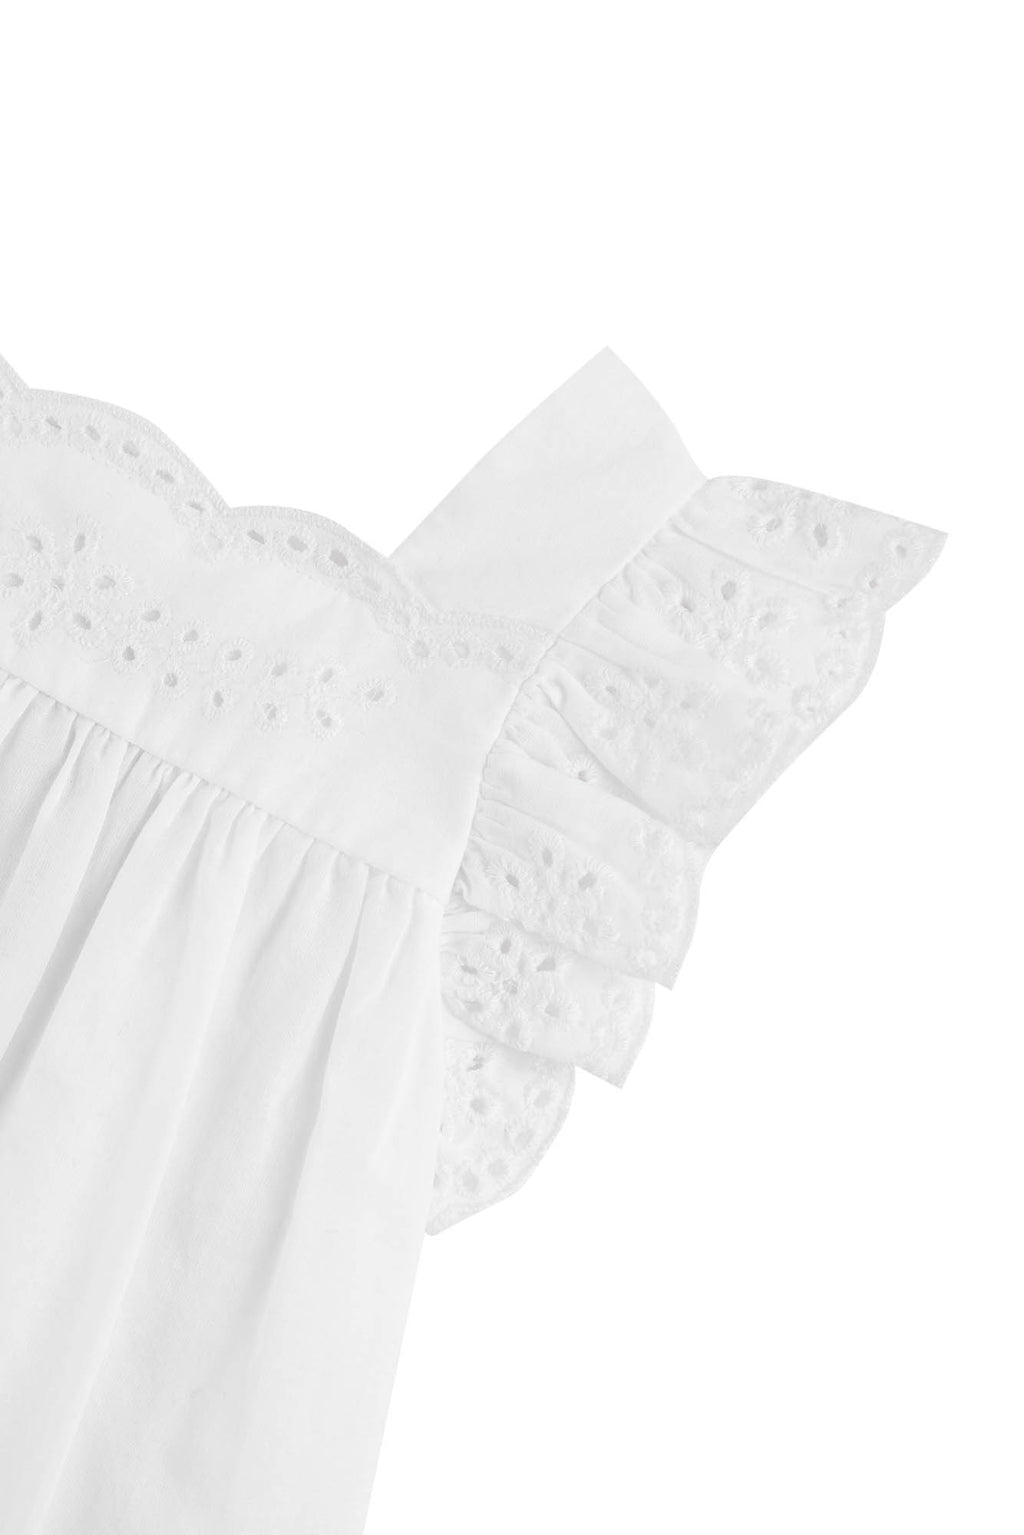 Dress - White English embroidery